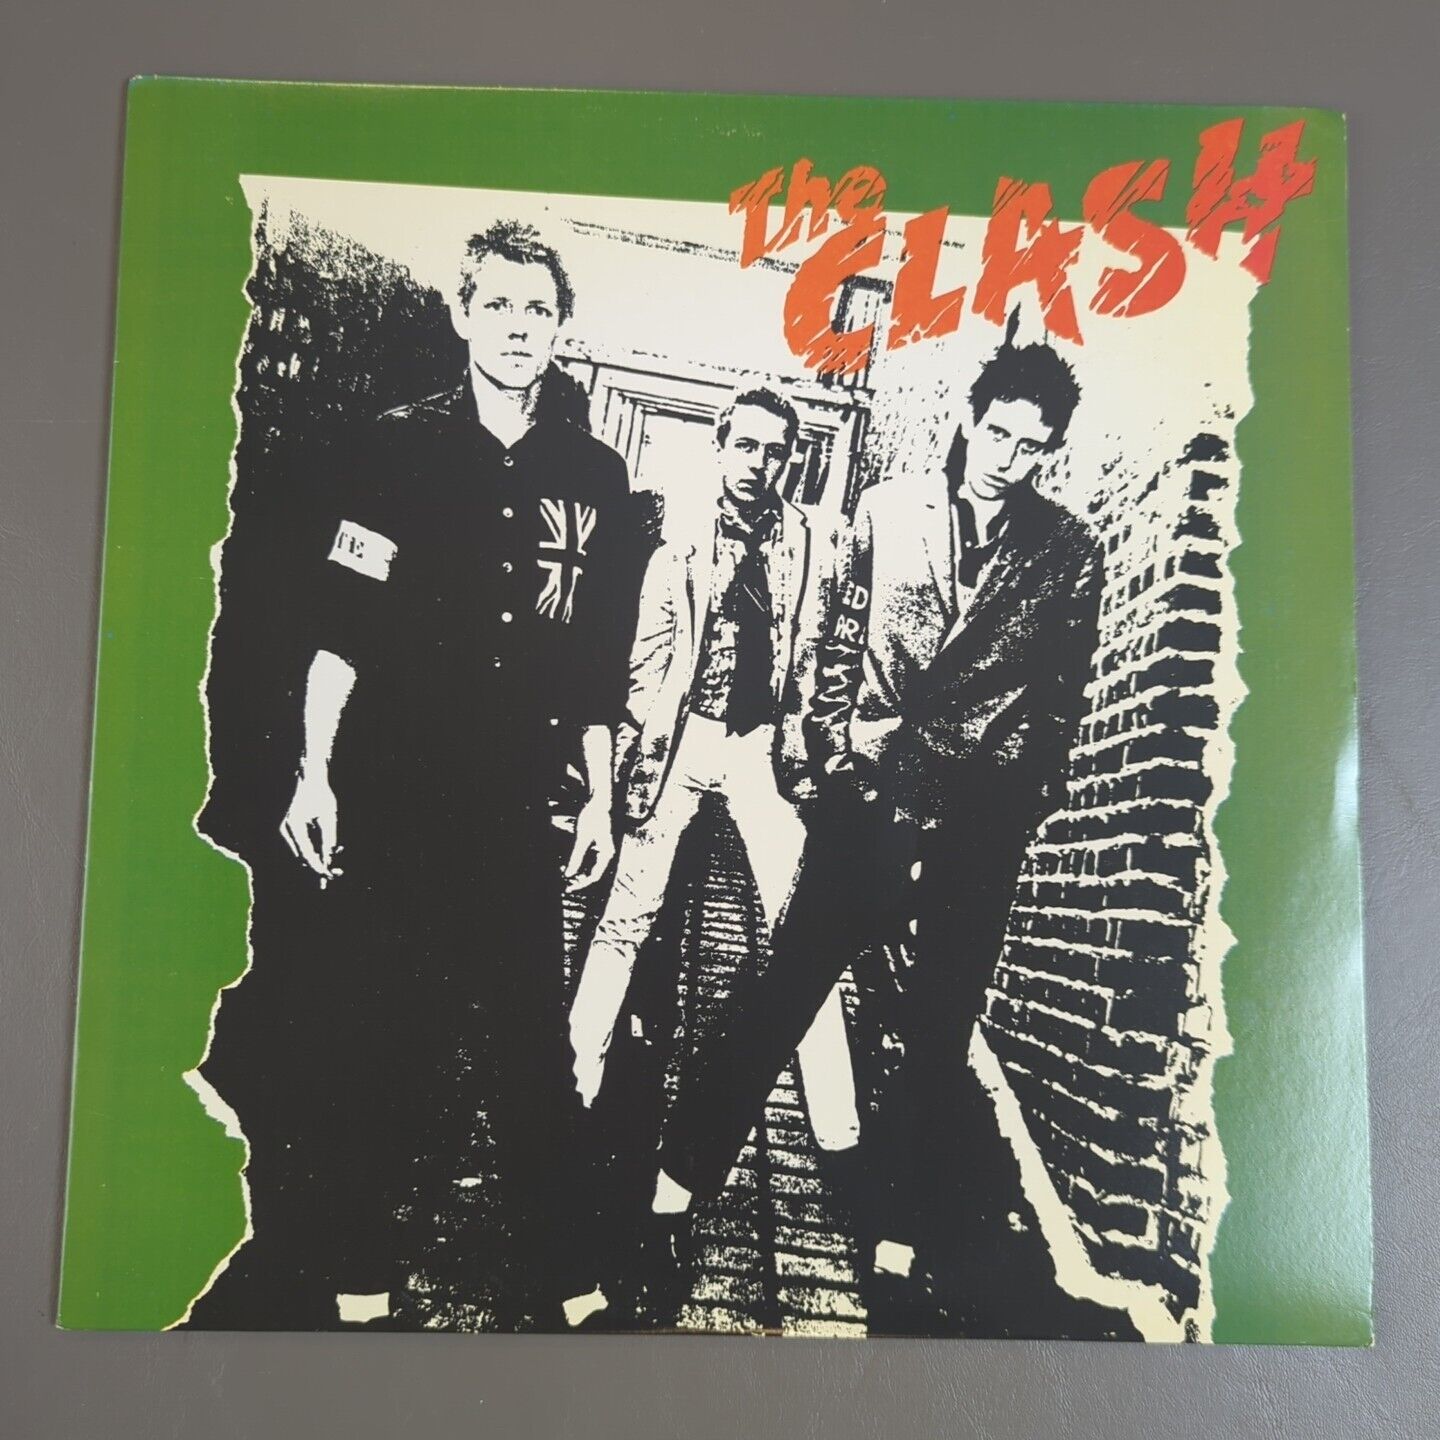 The Clash Self-Titled LP Vintage Vinyl Record 1979 Reissue AL-36060 VG+/VG+